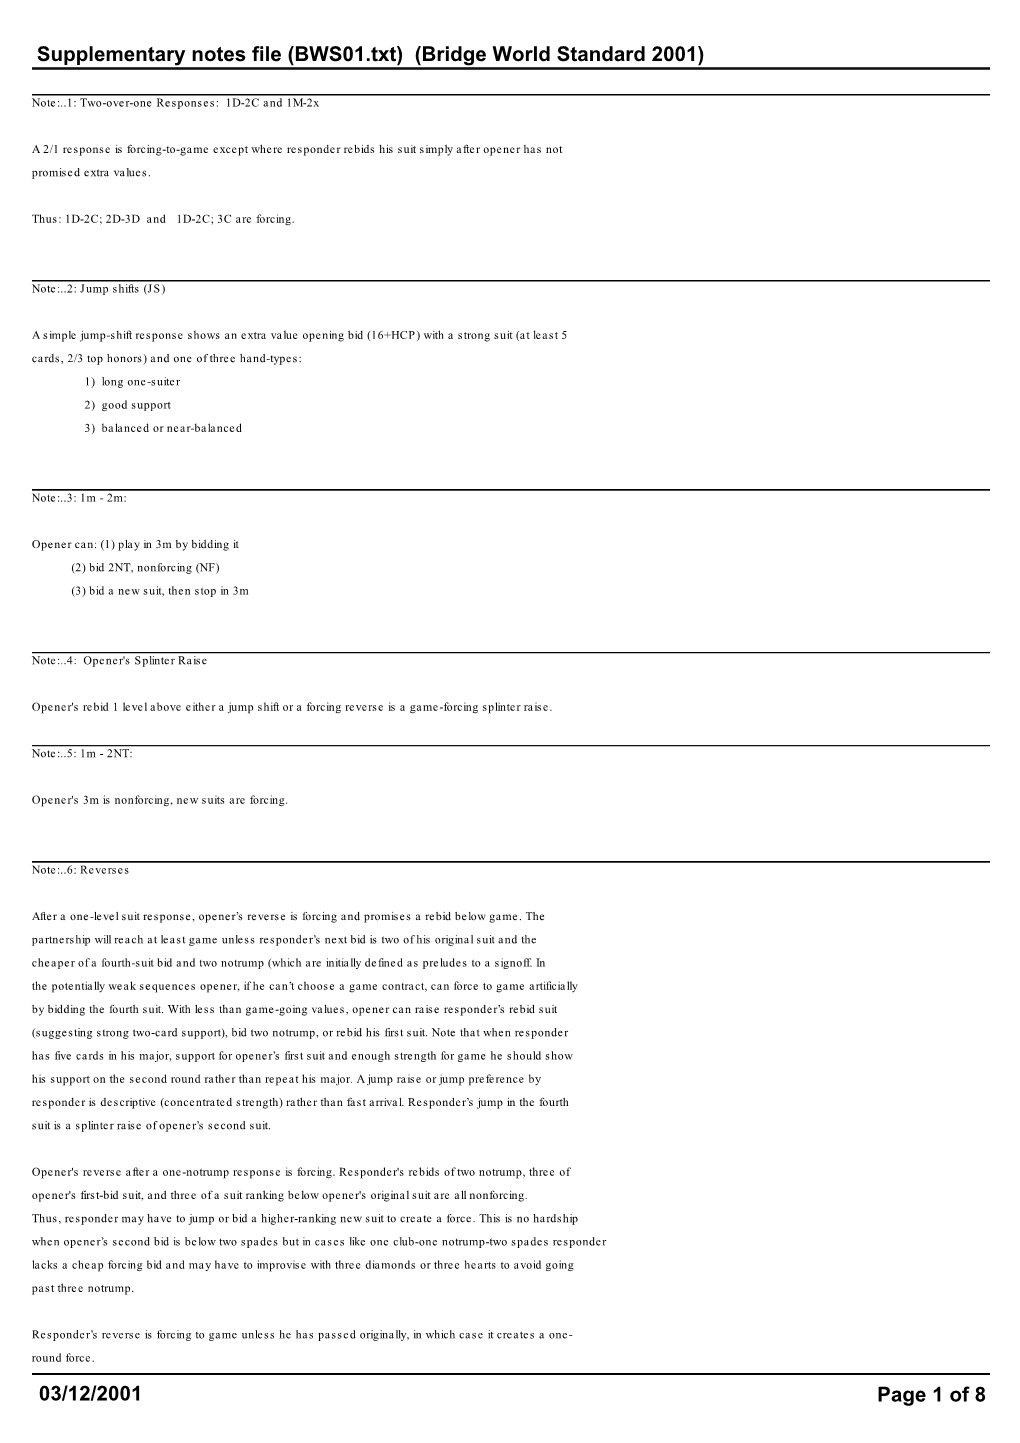 Supplementary Notes File (BWS01.Txt) (Bridge World Standard 2001) 03/12